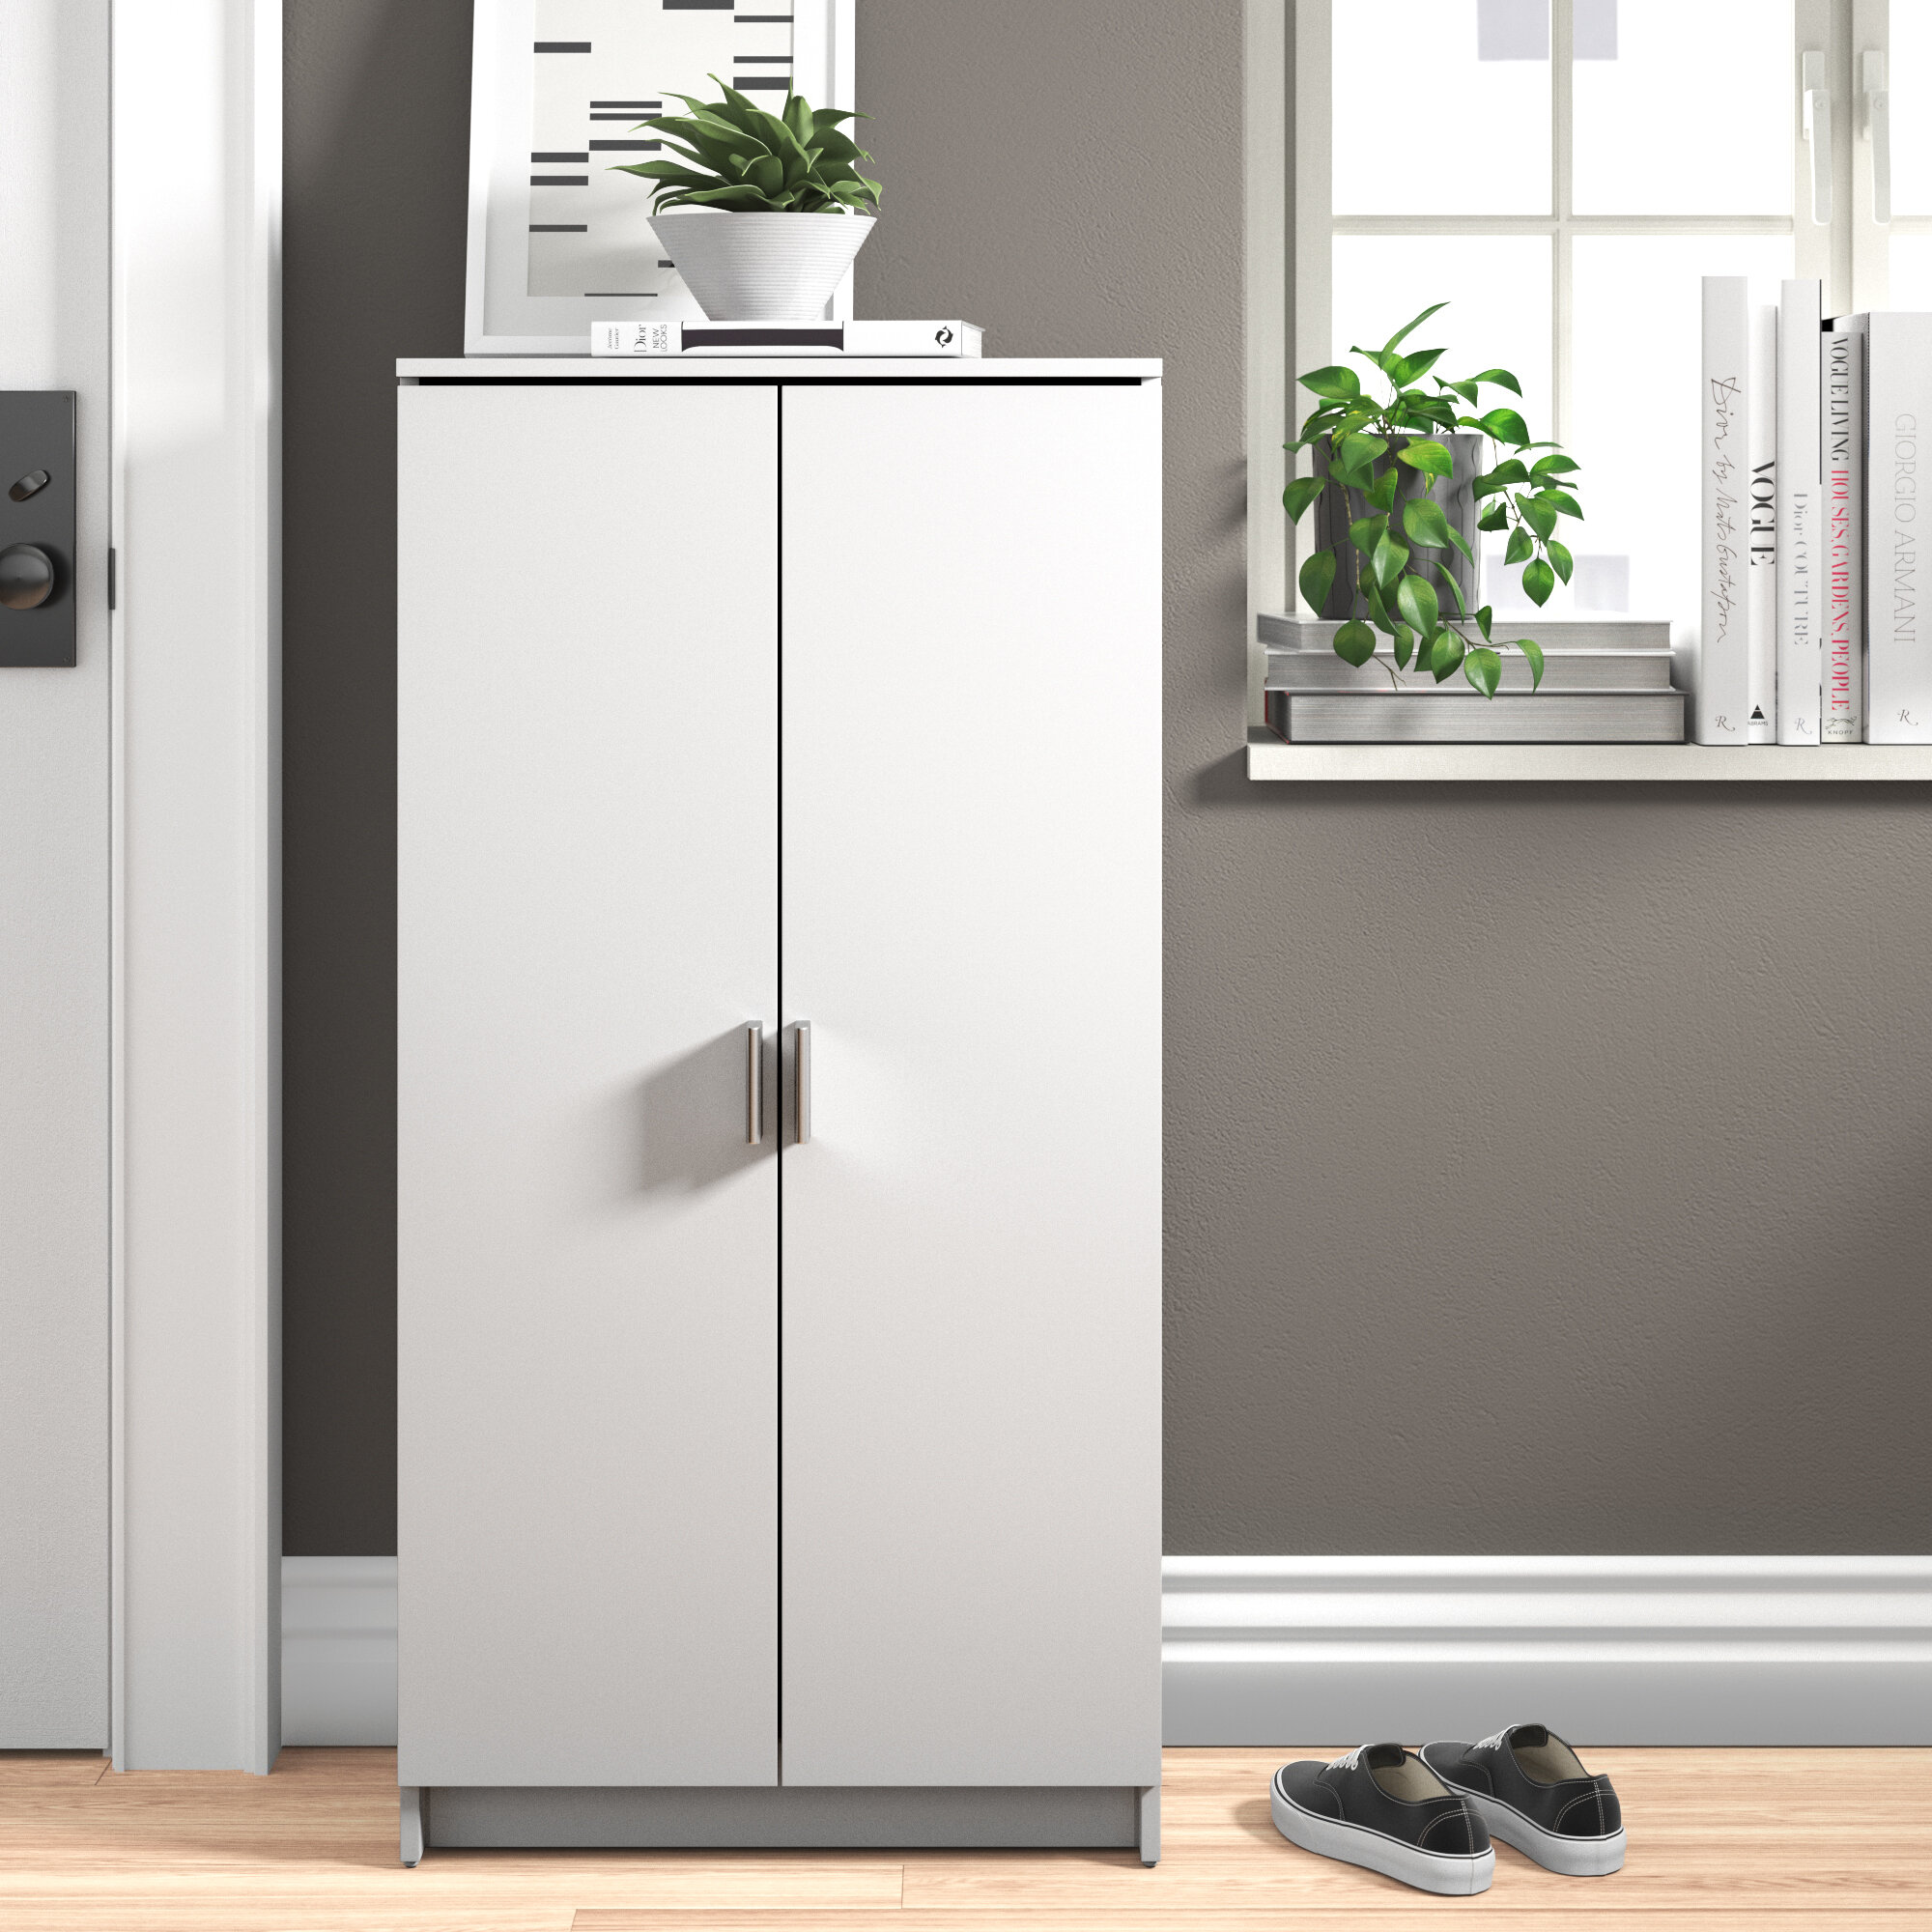 Zipcode Design 21 Pair Shoe Storage Cabinet Reviews Wayfair Co Uk